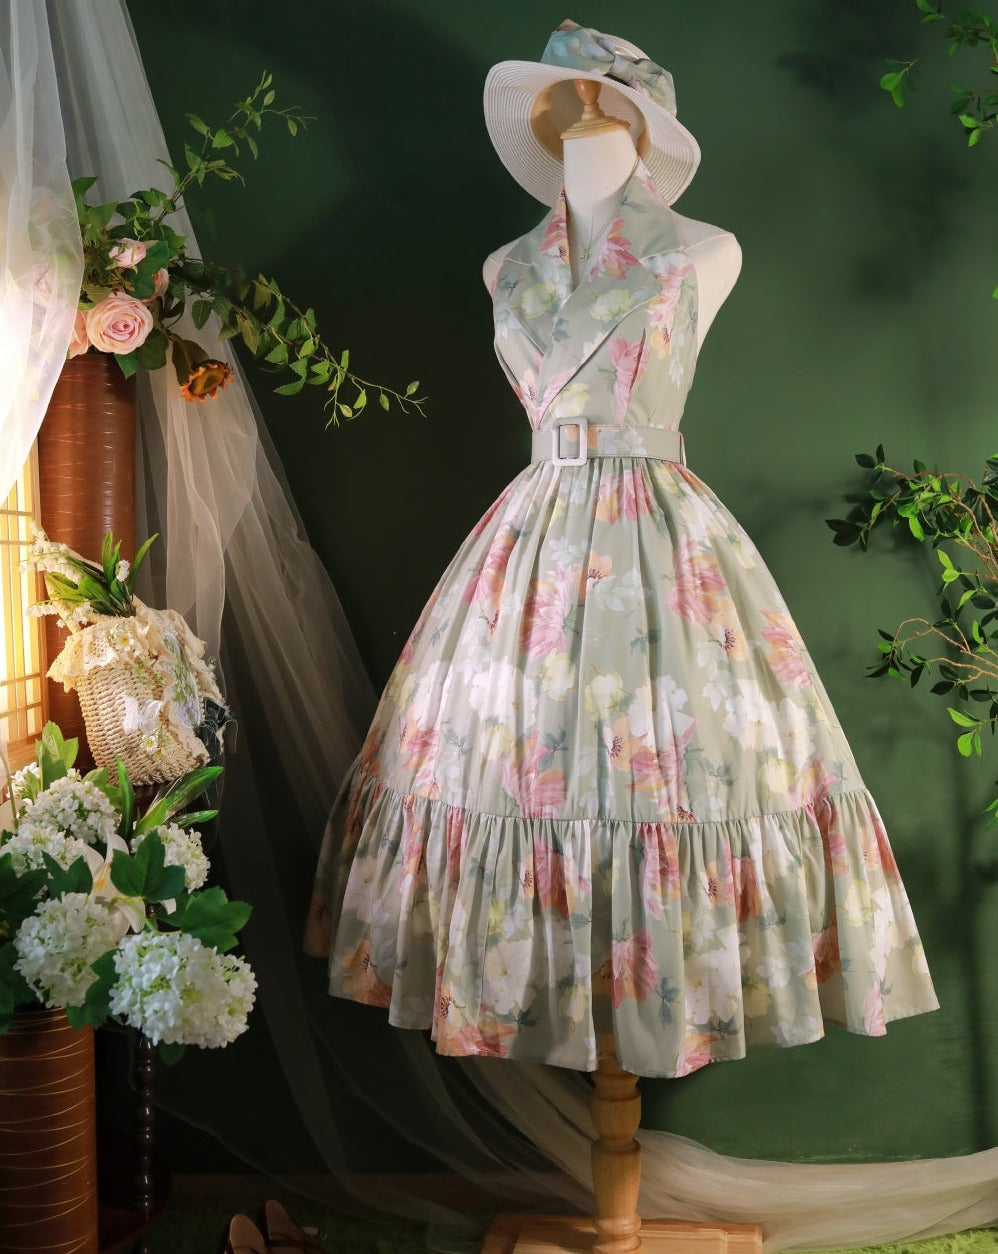 Miss Polka retro 50's floral jumper skirt